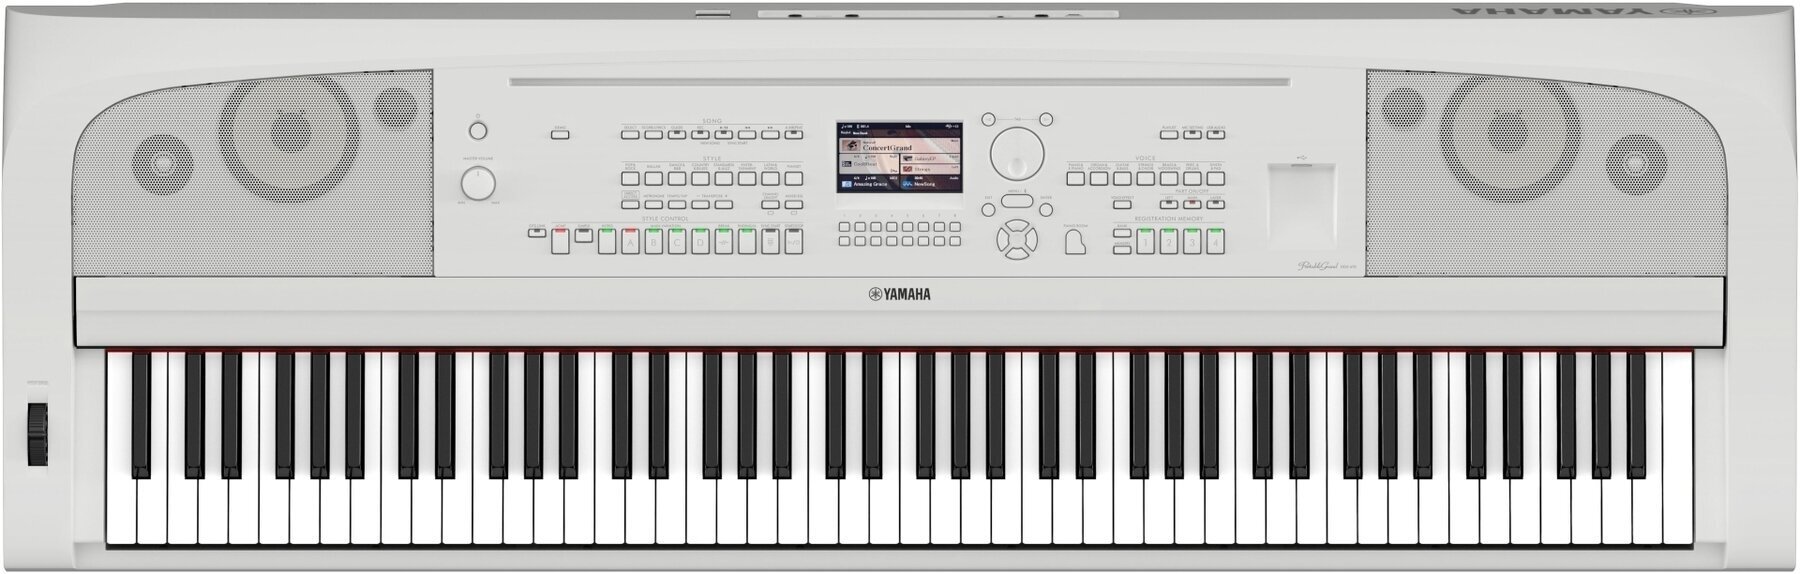 Digital Stage Piano Yamaha DGX 670 Digital Stage Piano